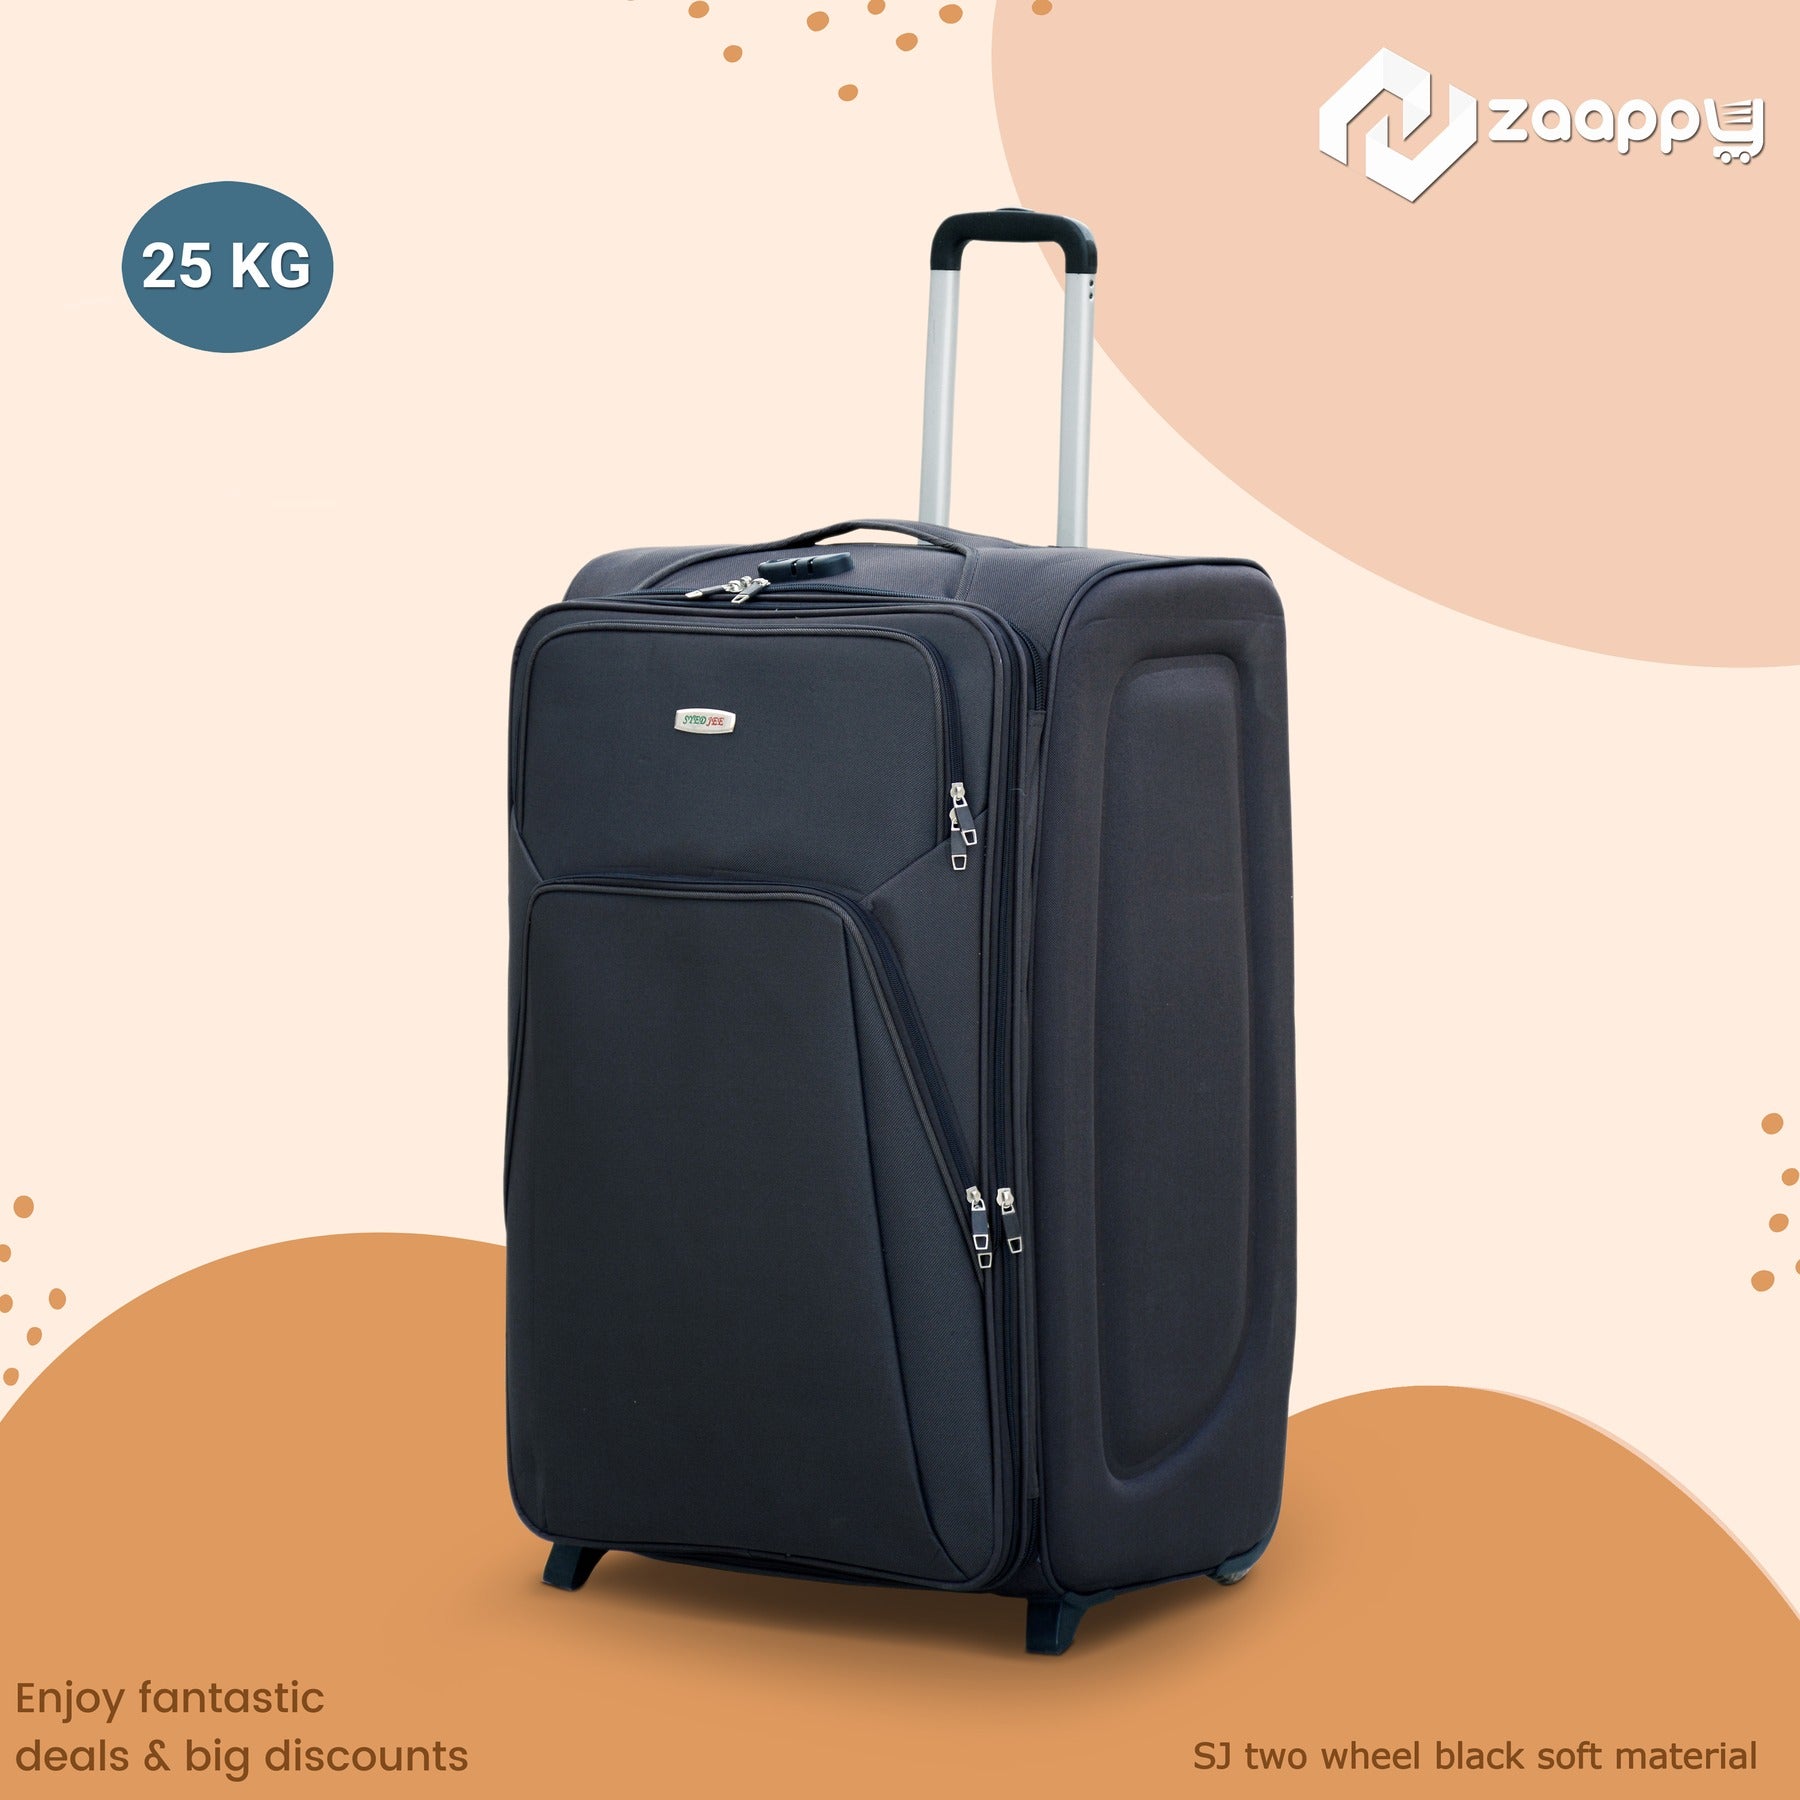 Travel Luggage 2 Wheel Soft Material Luggage Black | FLLGSM2WBK